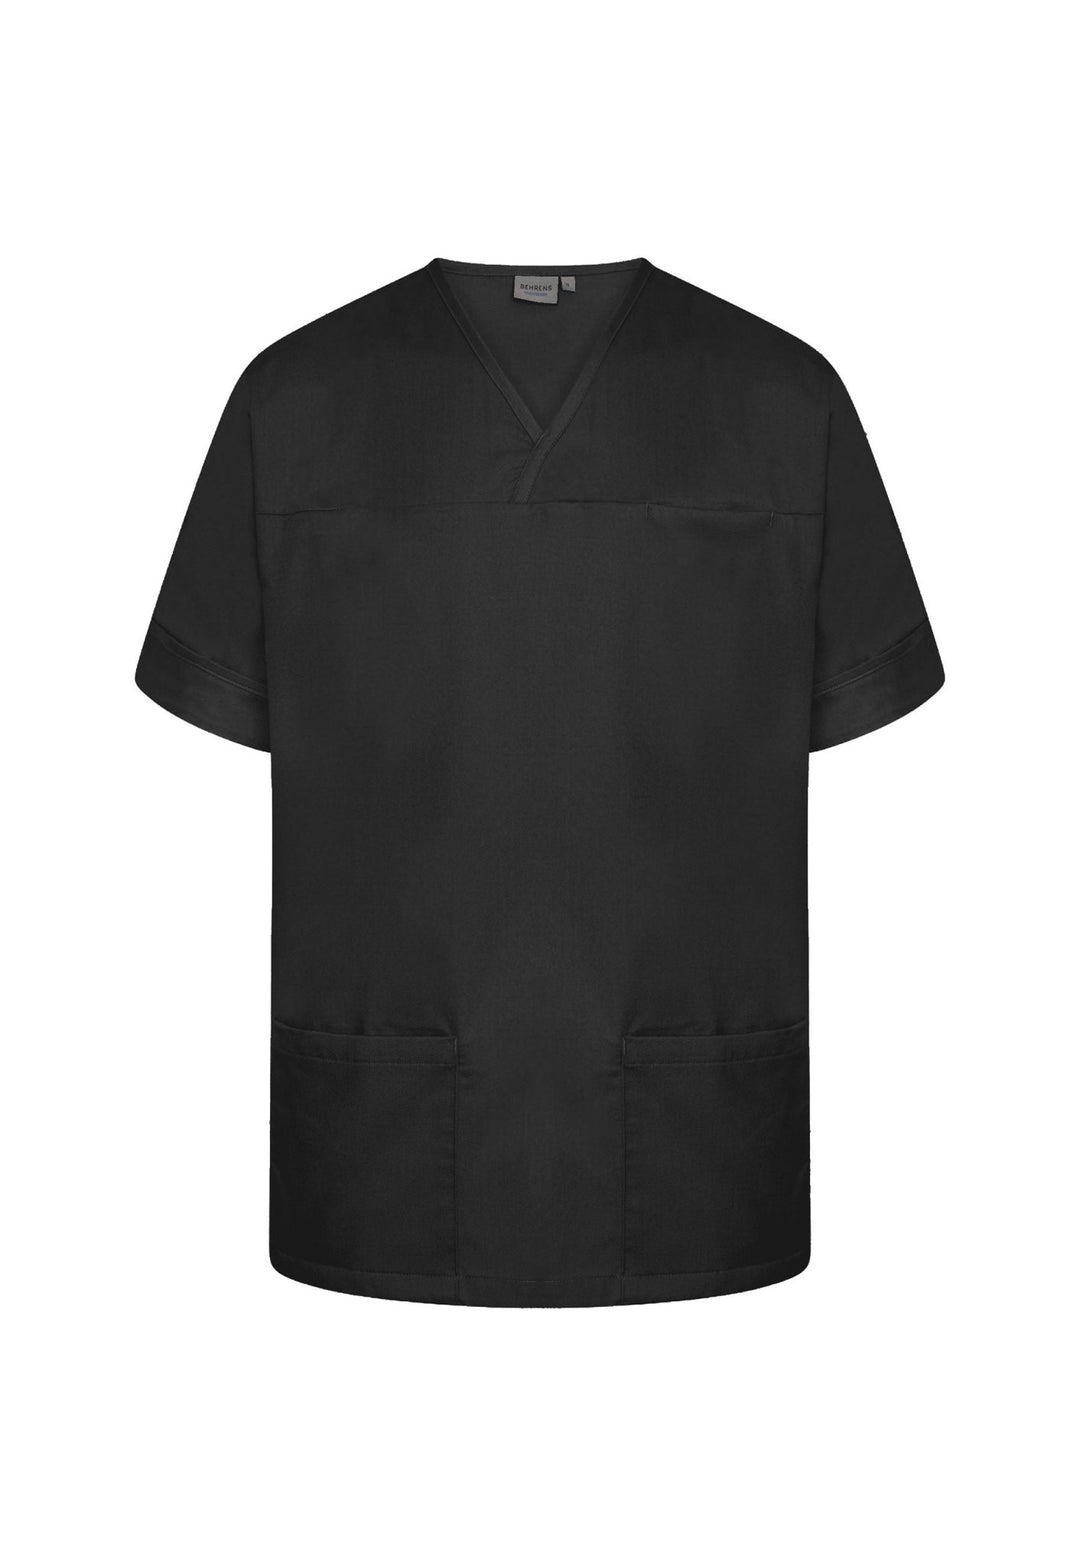 NSTP - Unisex Plain Smart Scrub Tunic - The Work Uniform Company